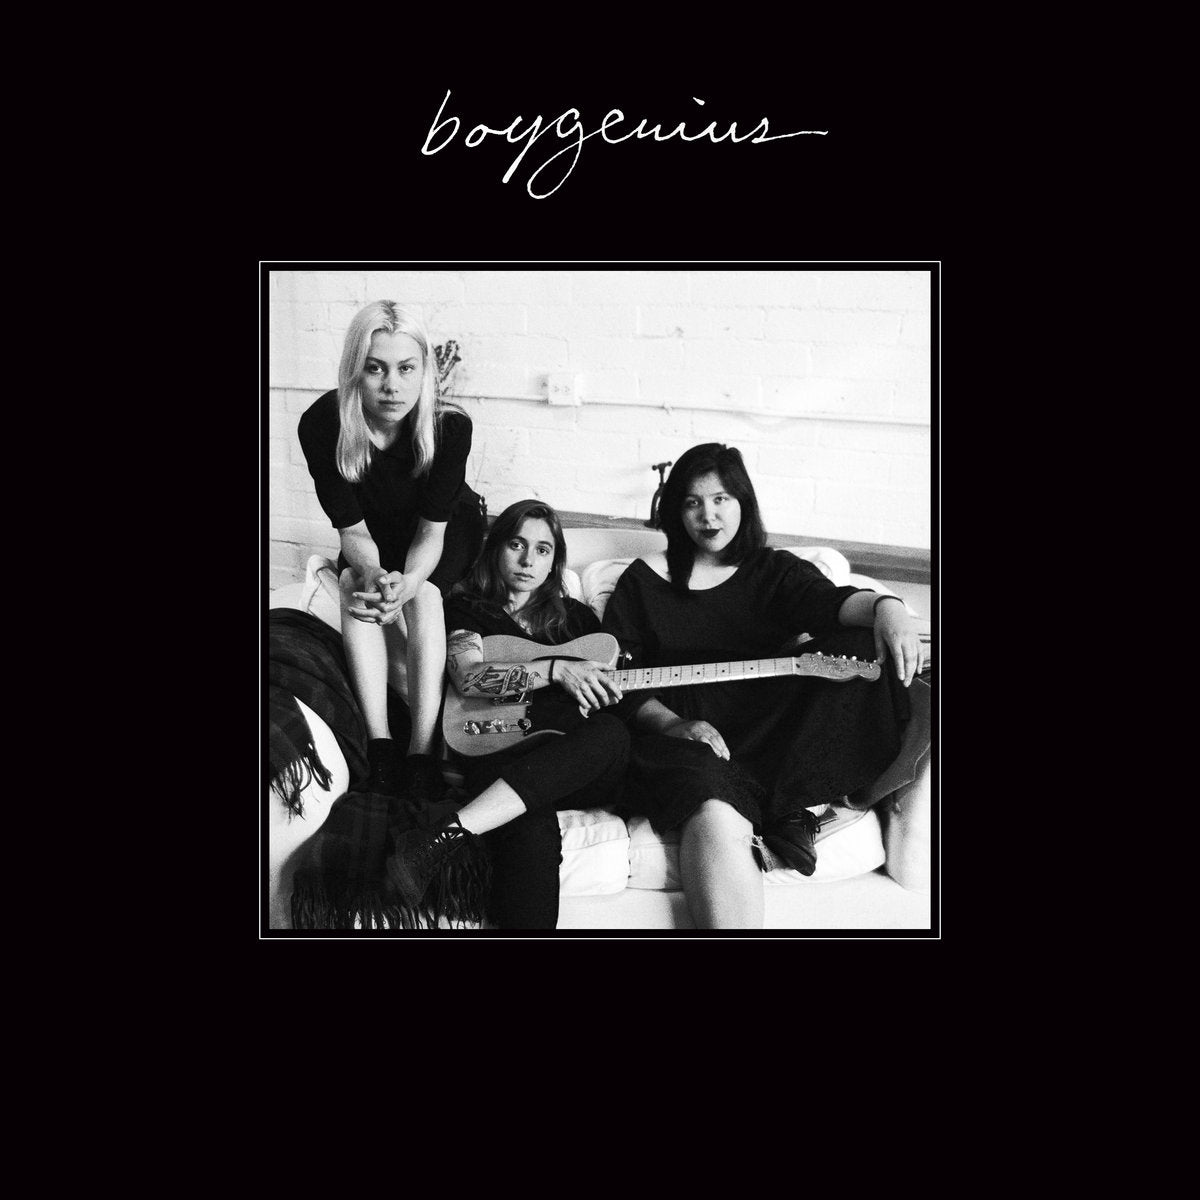 boygenius "boygenius" 12" Vinyl